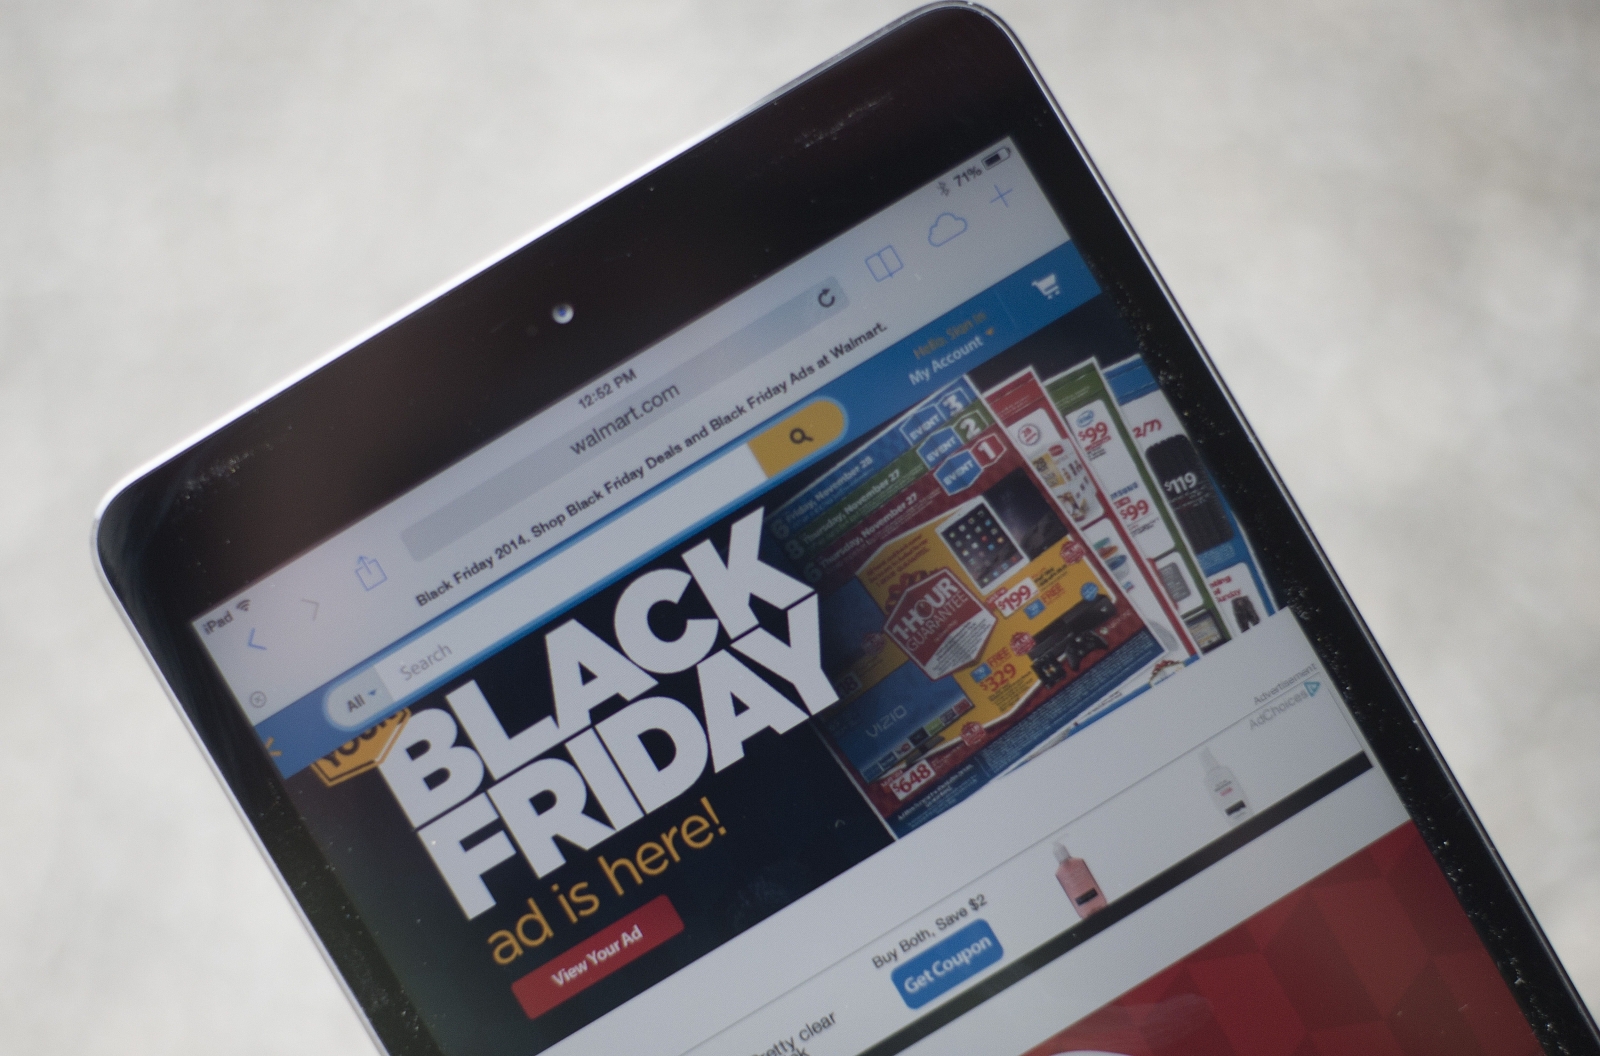 Black Friday Deals Live Blog - The Best UK Specials on Smartphones, Tablets, Apple and more